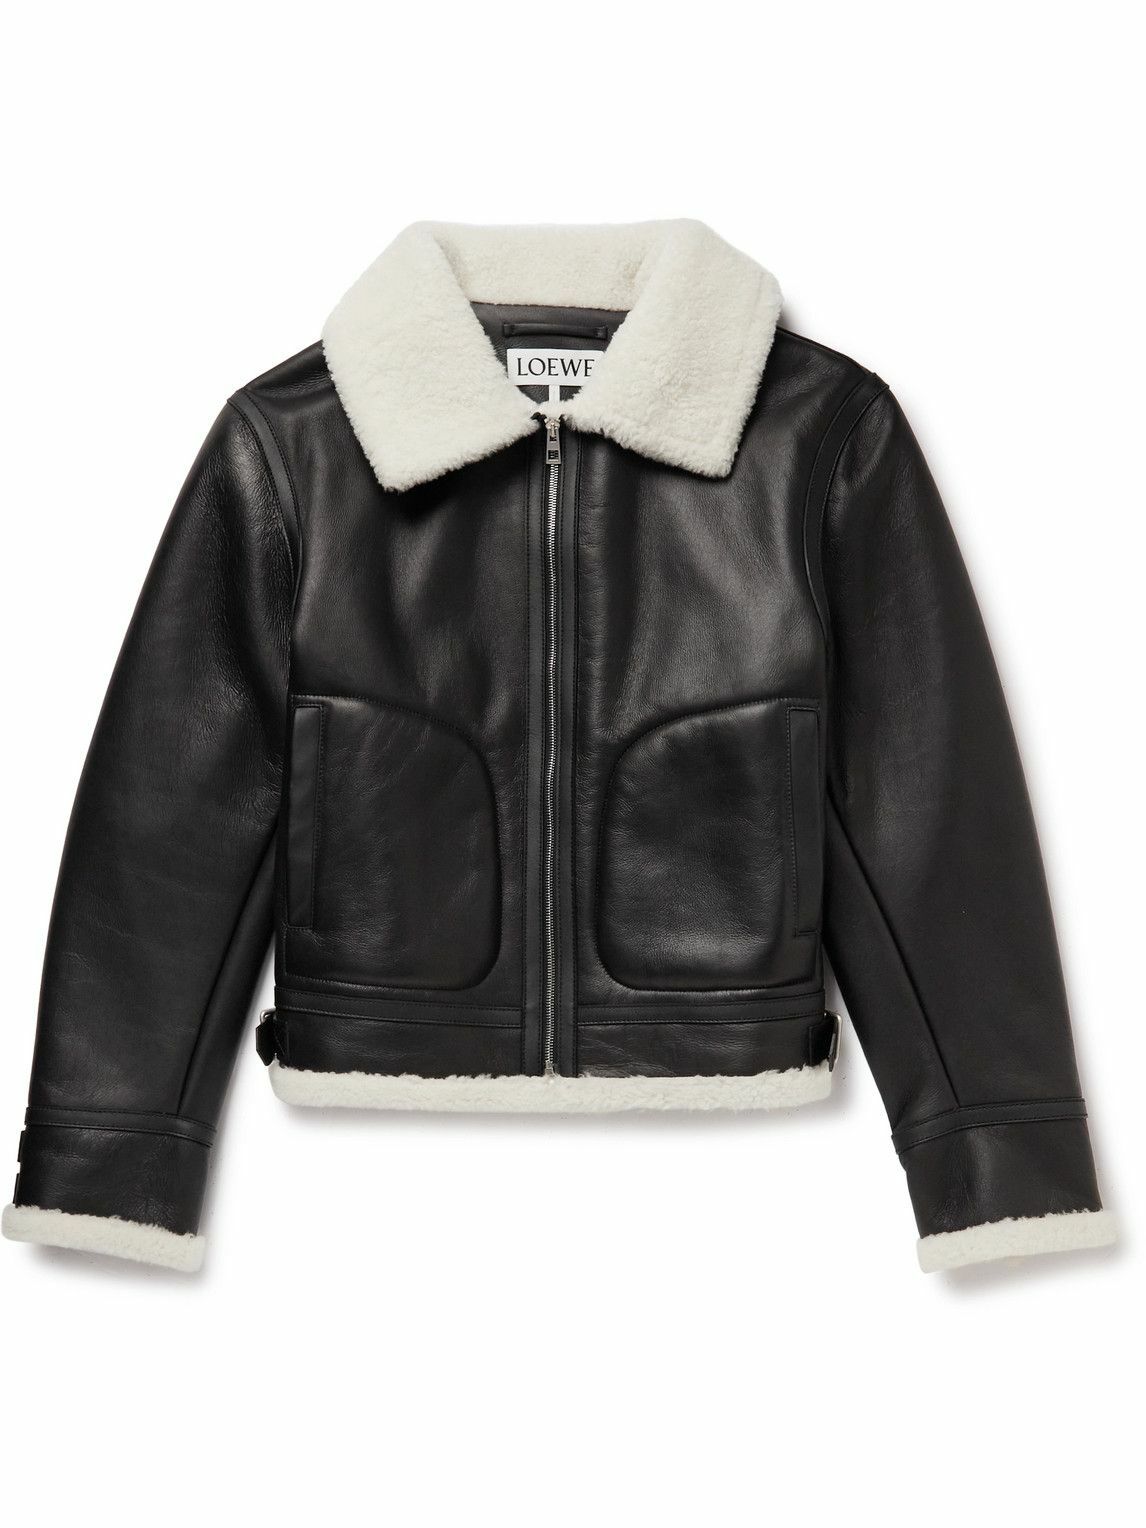 Photo: Loewe - Shearling-Lined Leather Jacket - Black